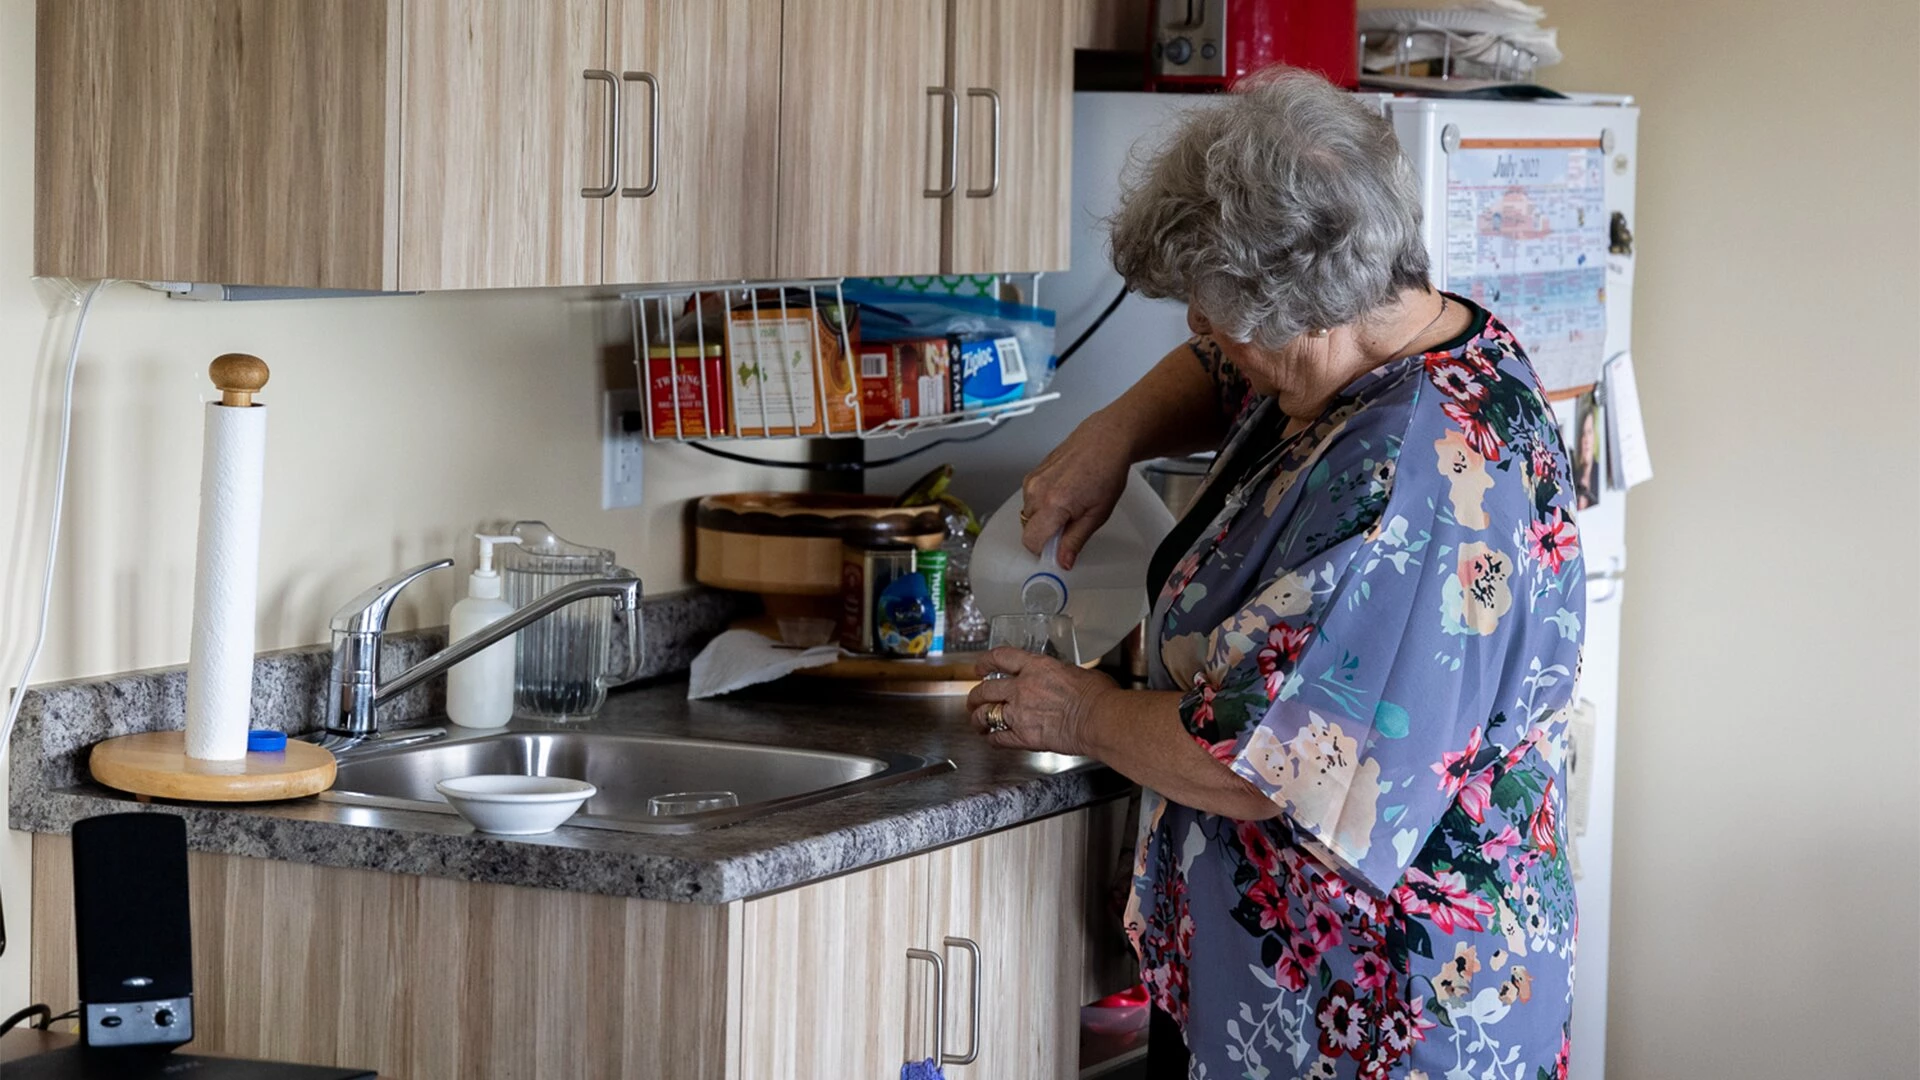 An elderly lady doing work in her kitchen